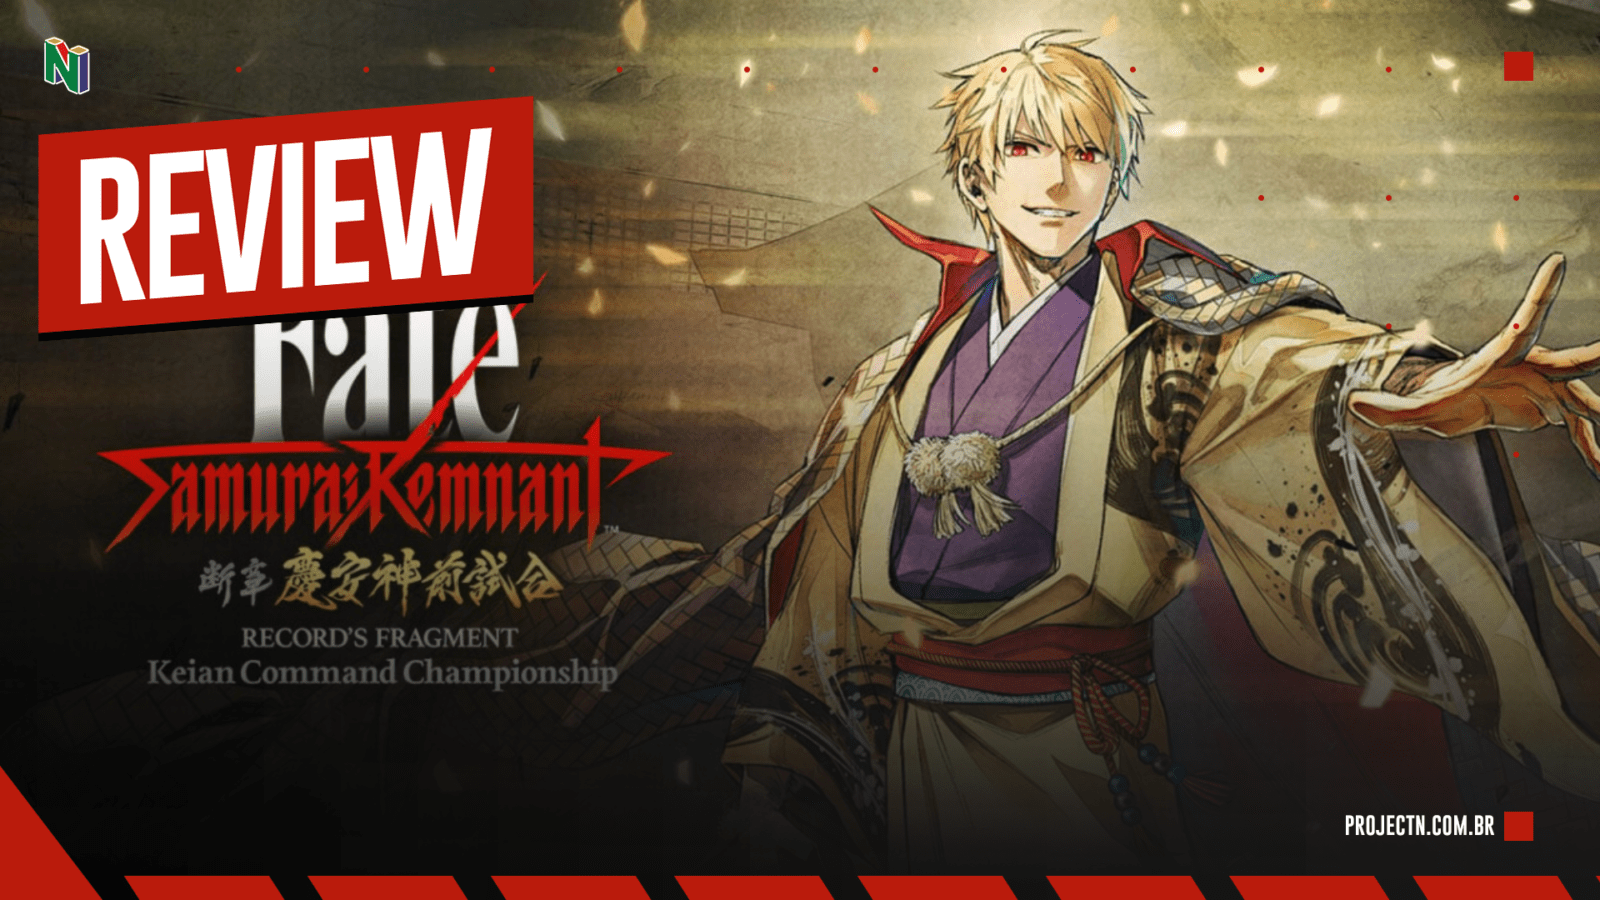 Fate Samurai/Remnant DLC Vol. 1 - Record’s Fragment: Keian Command Championship